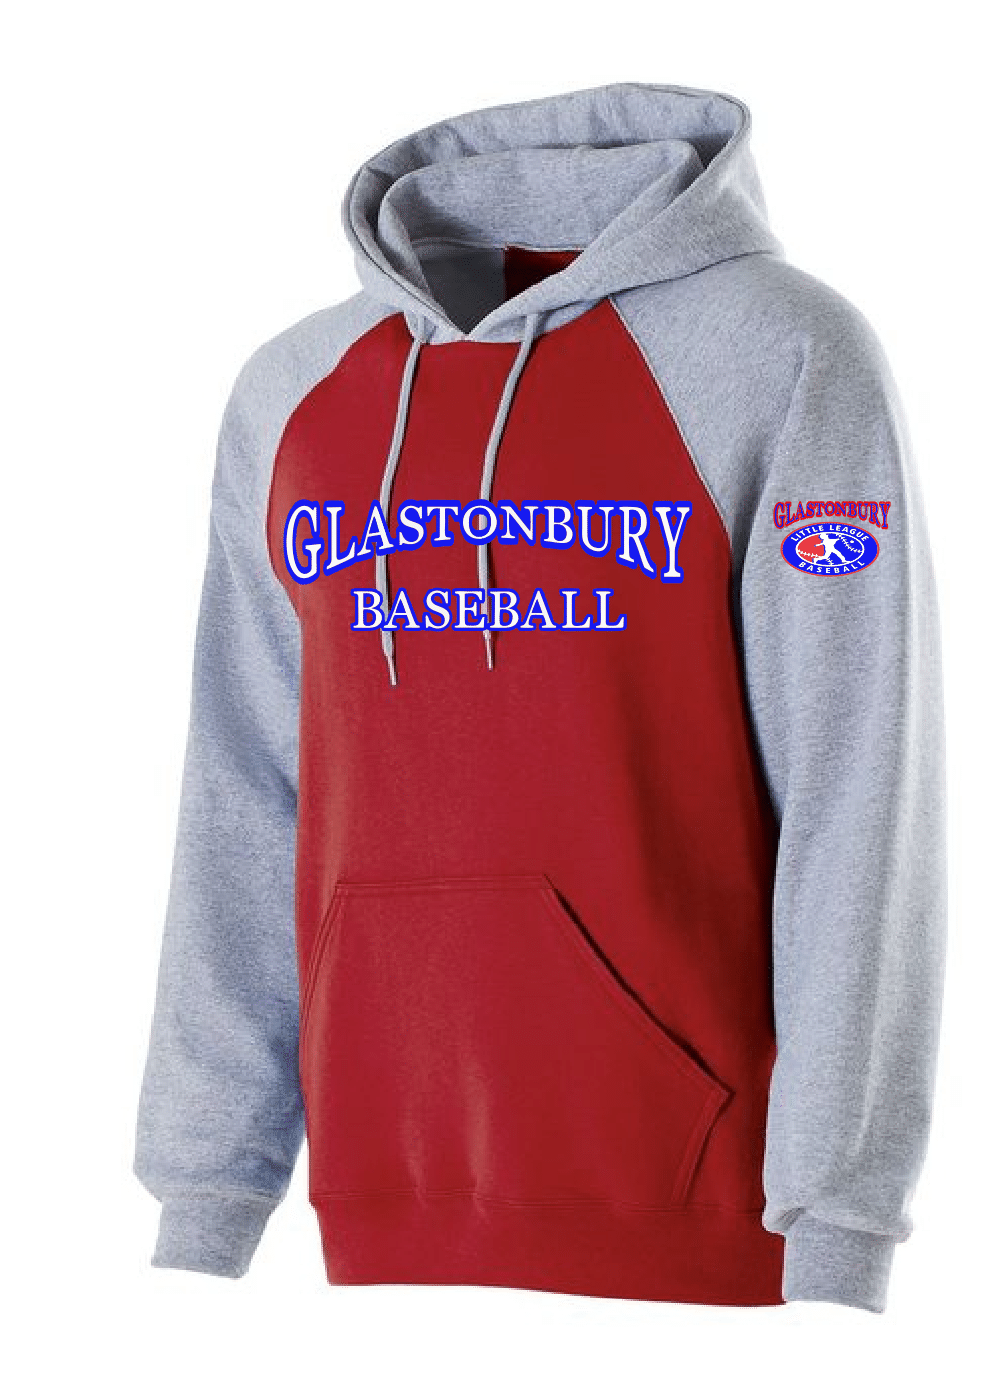 Glastonbury Little League Baseball Hooded Sweatshirt